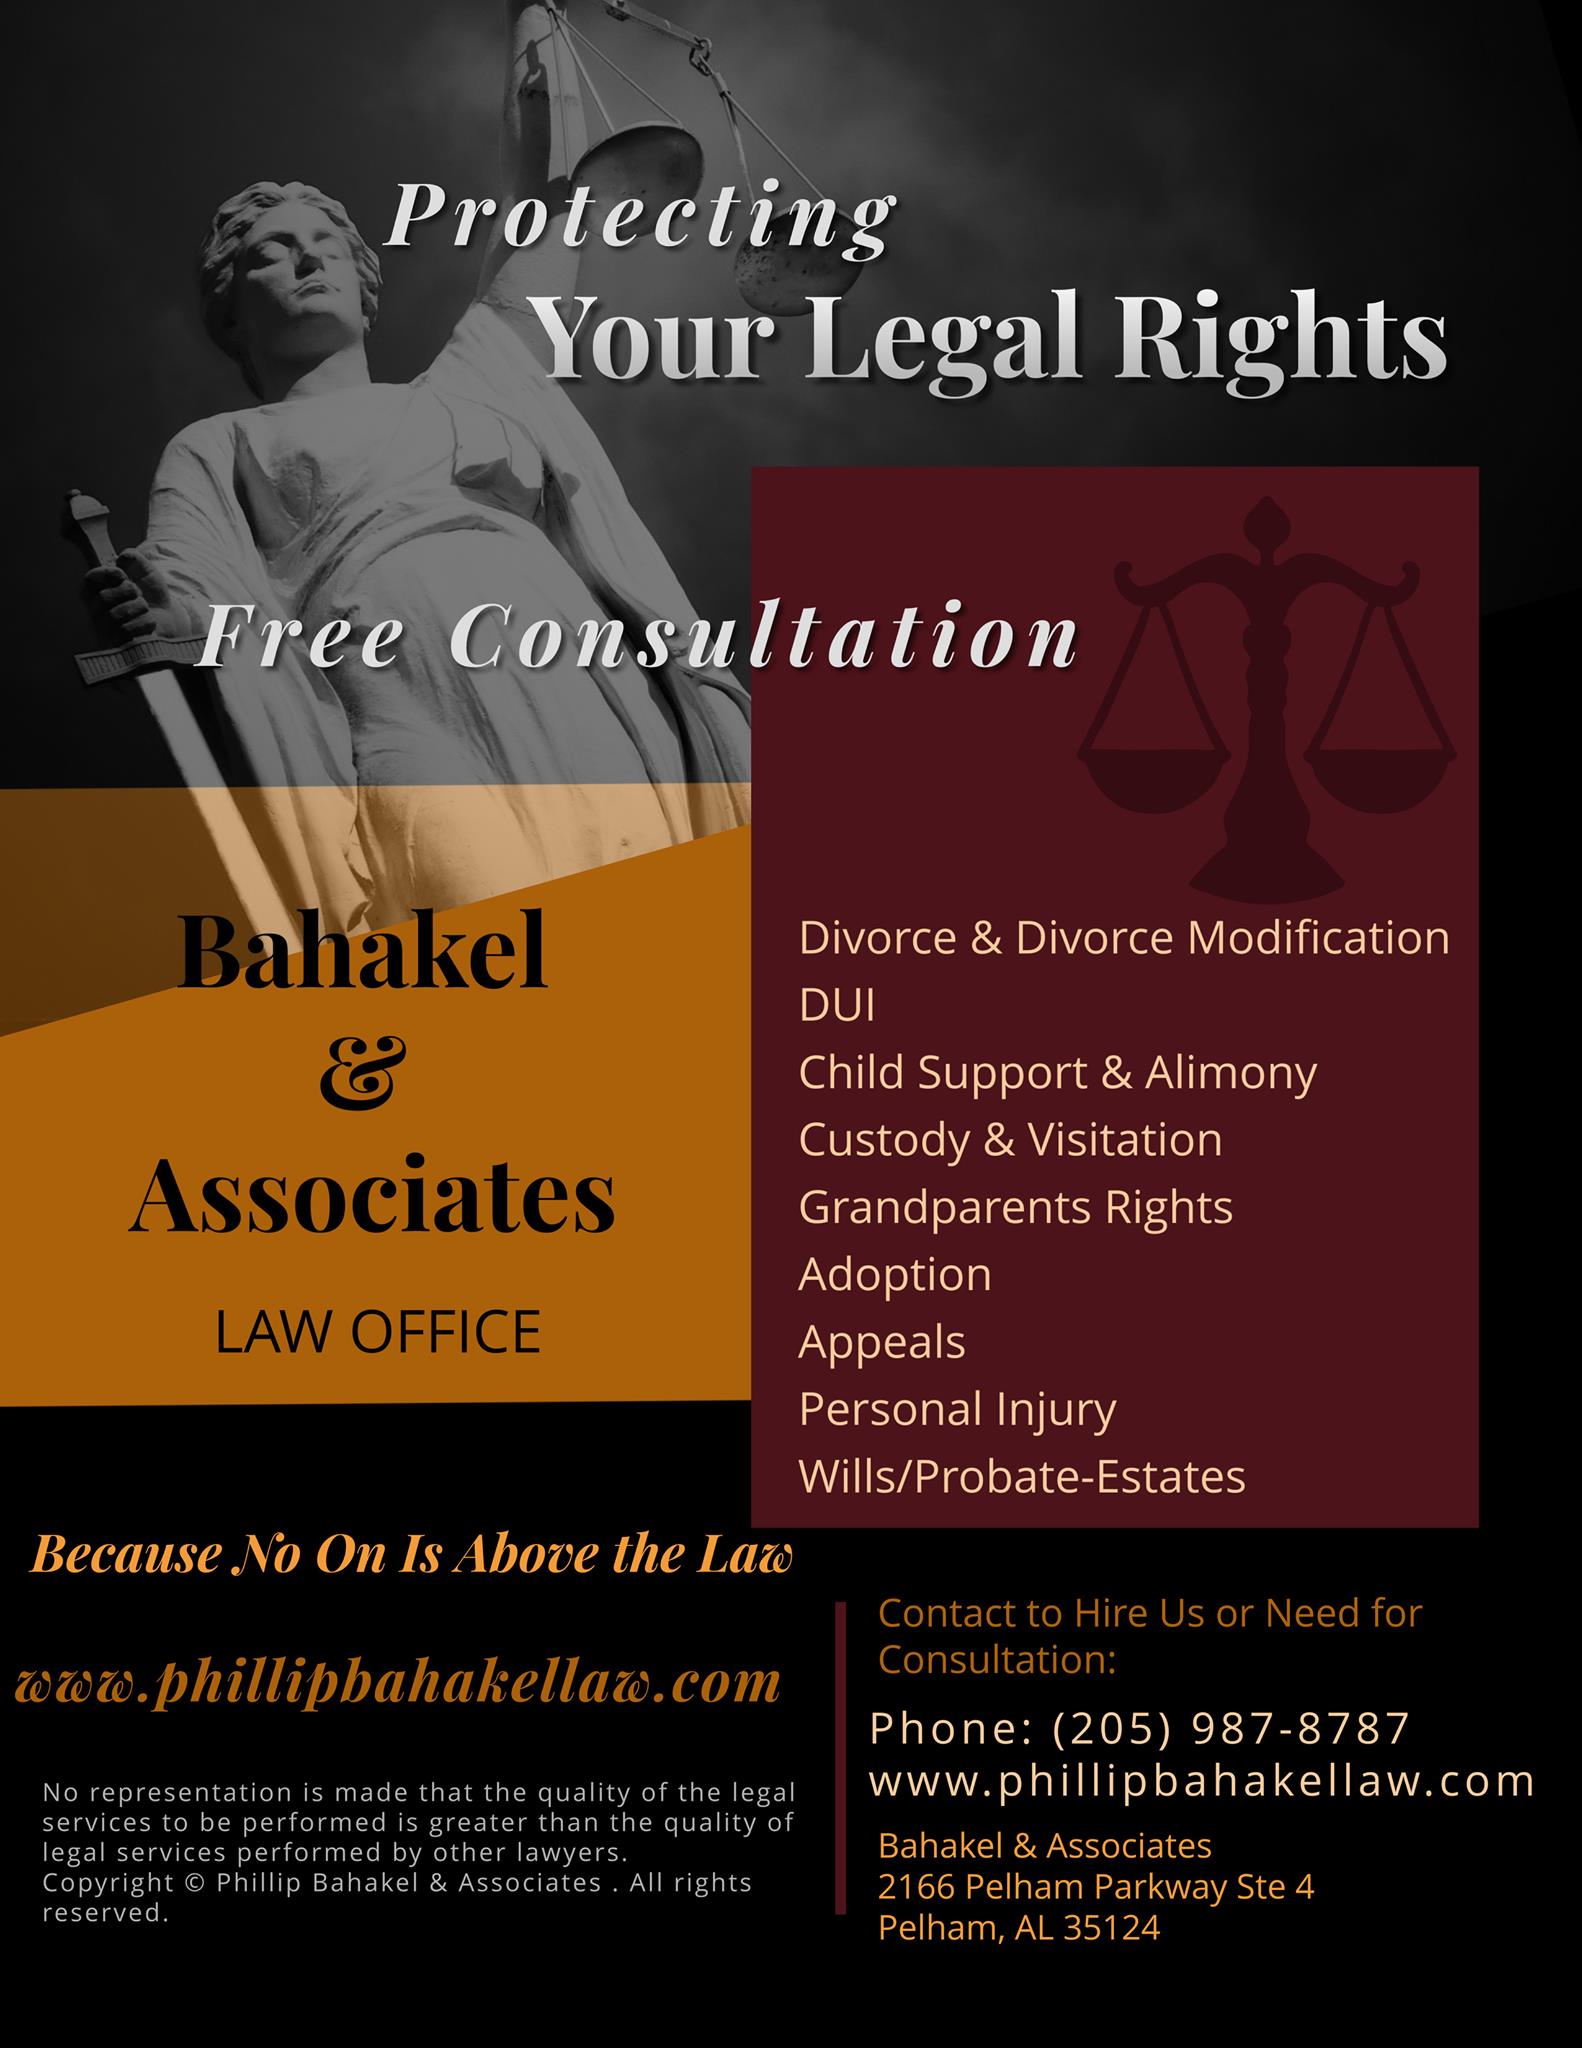 Phillip Bahakel & Associates